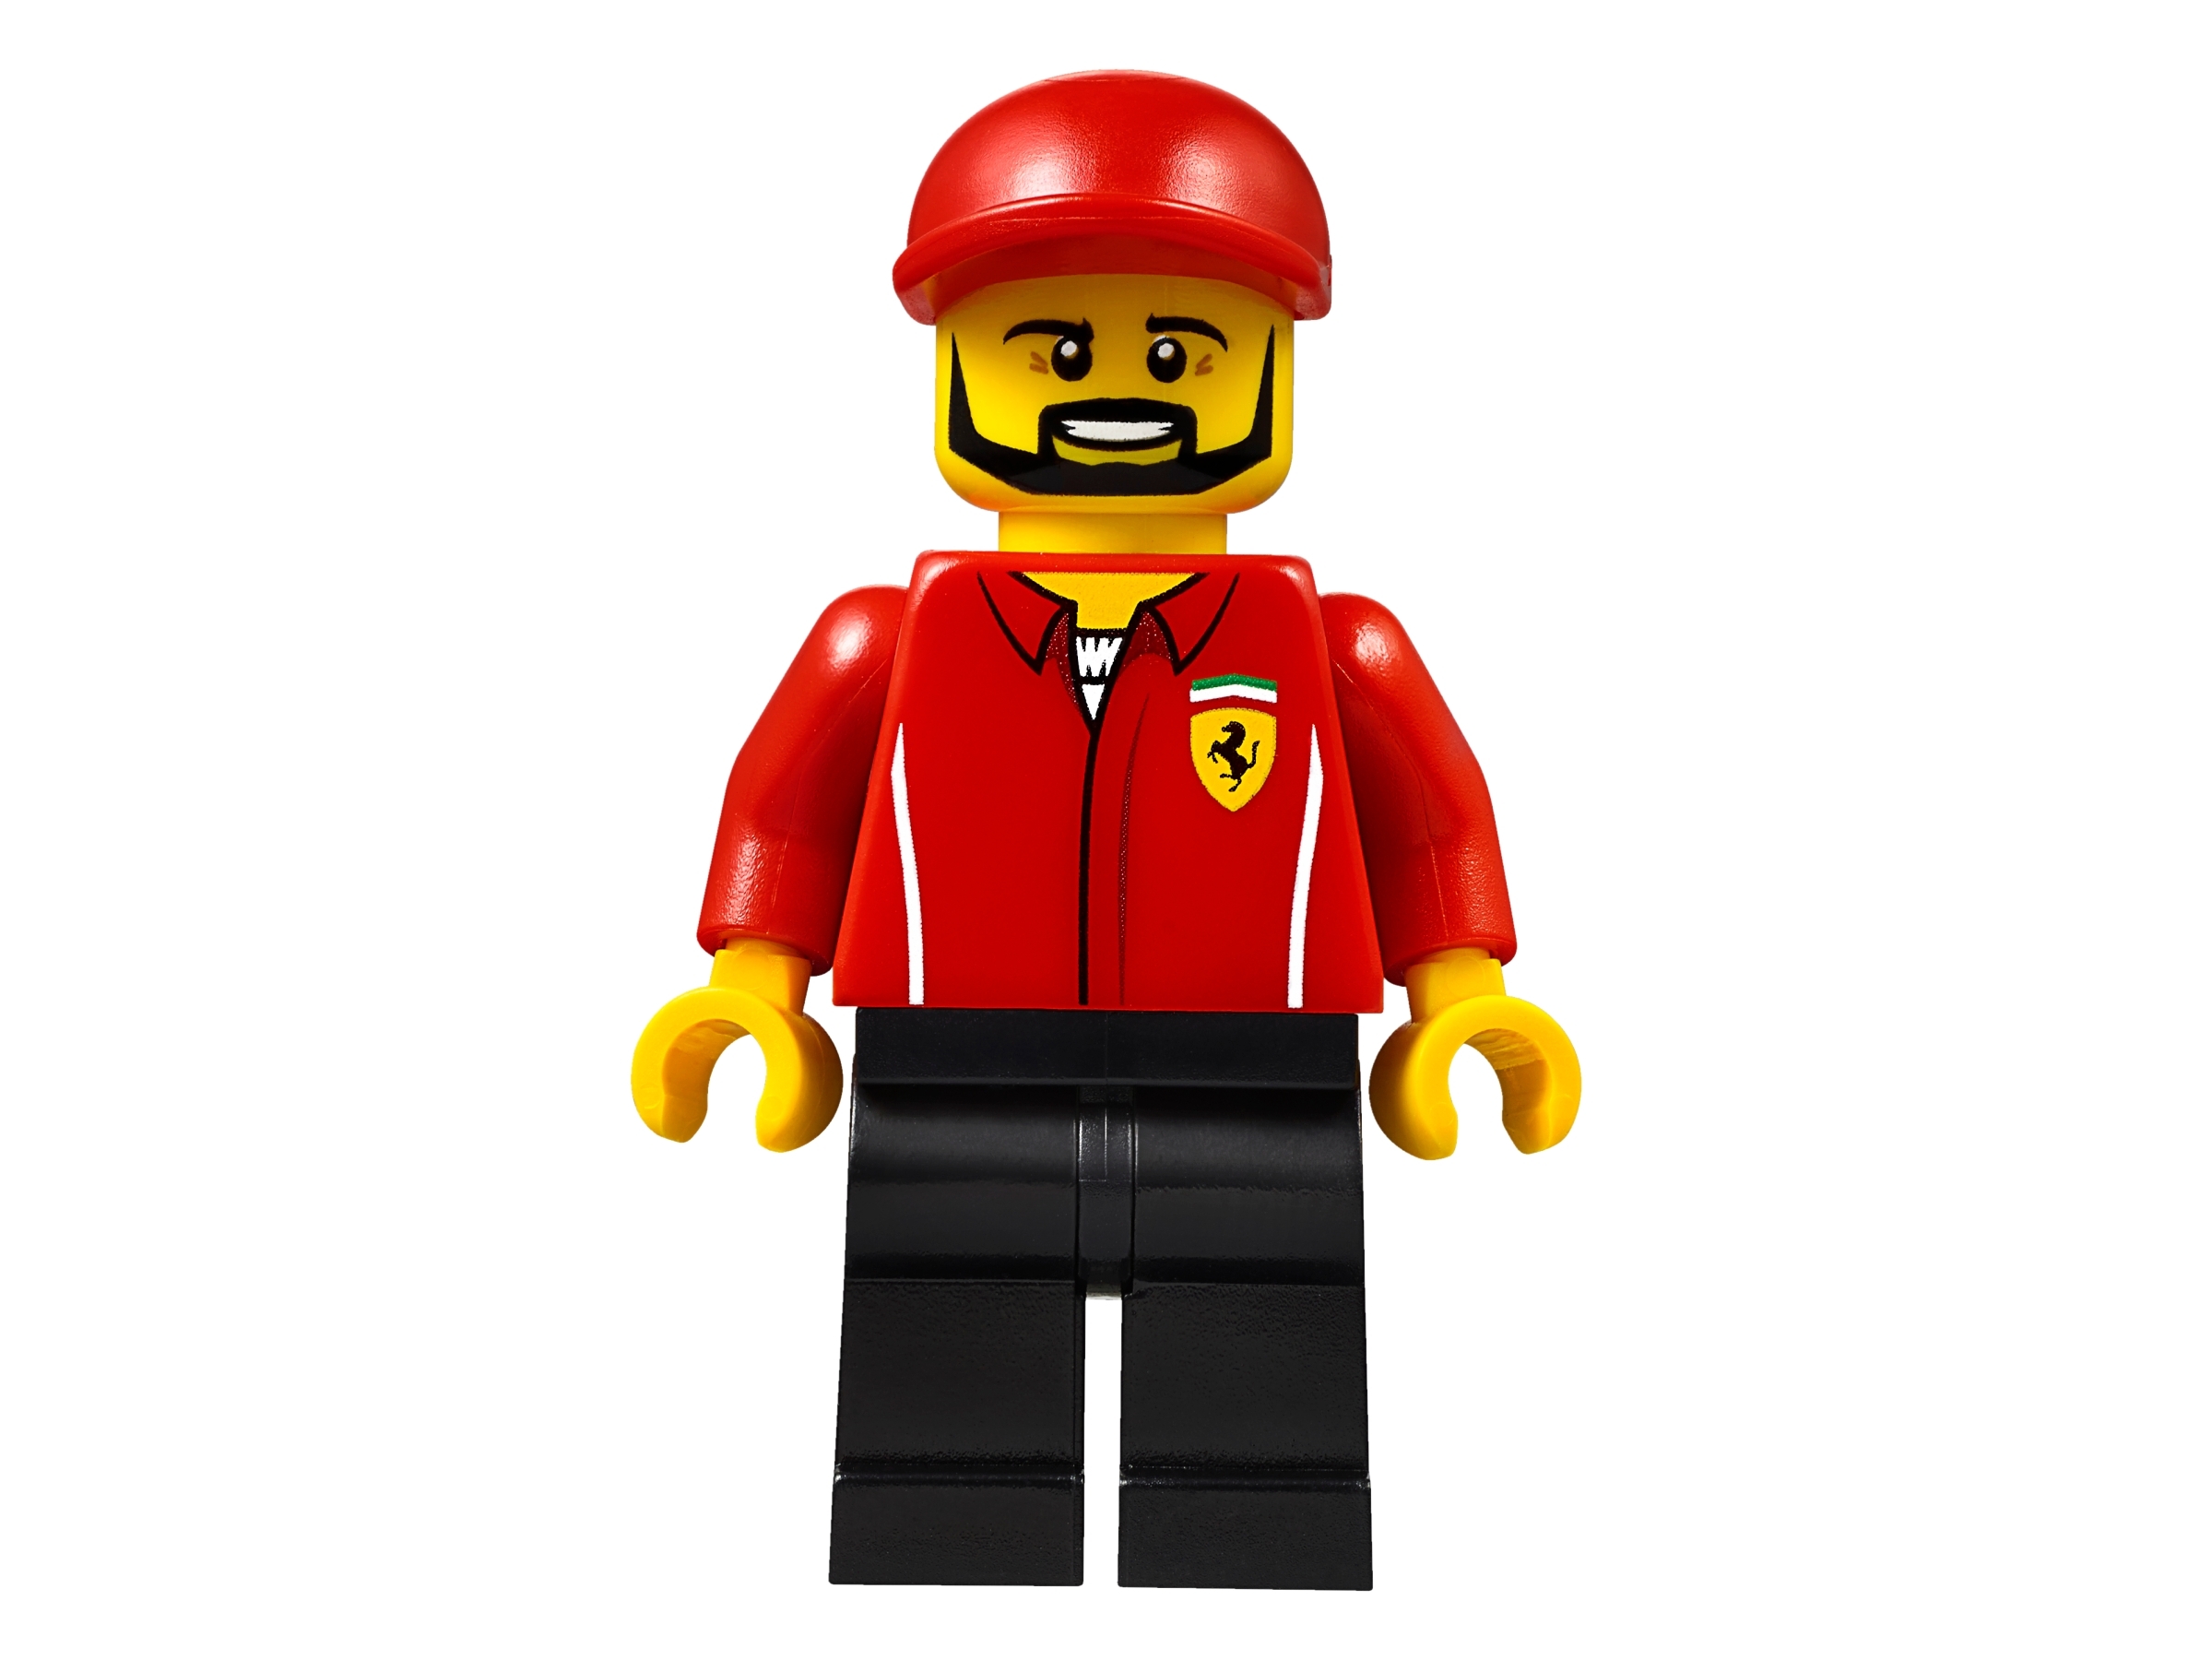 mynte Studiet bacon Ferrari FXX K & Development Center 75882 | Speed Champions | Buy online at  the Official LEGO® Shop US